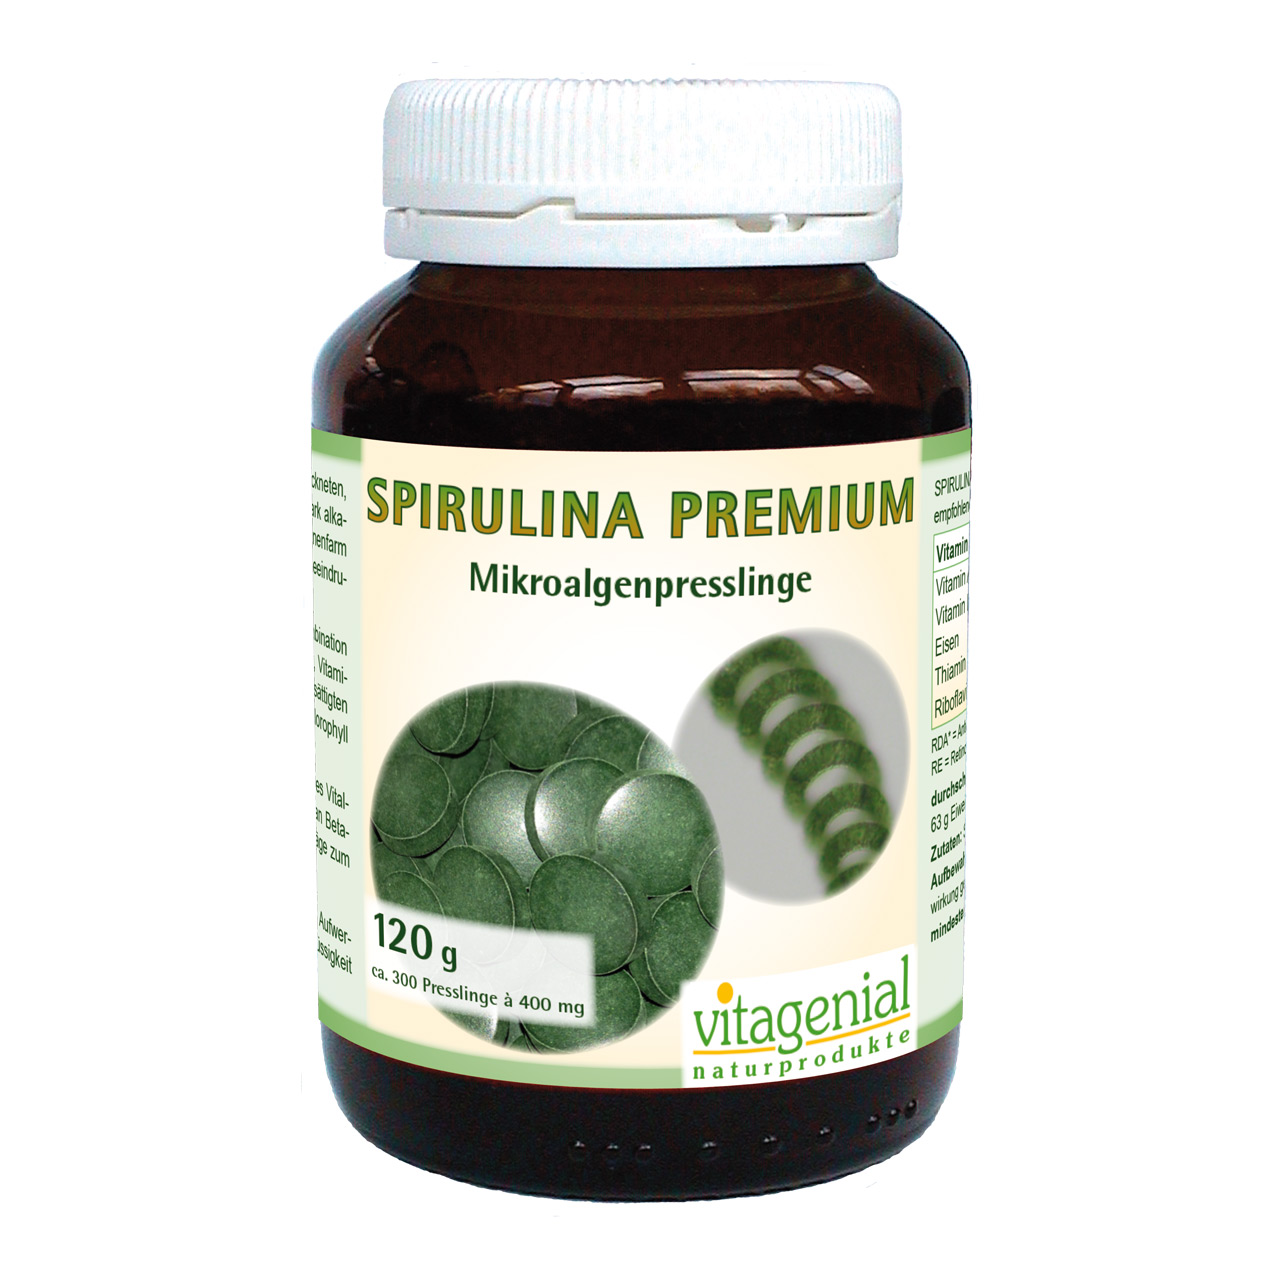 Vitagenial Spirulina Mikroalgenpresslinge in 120 Gramm Version